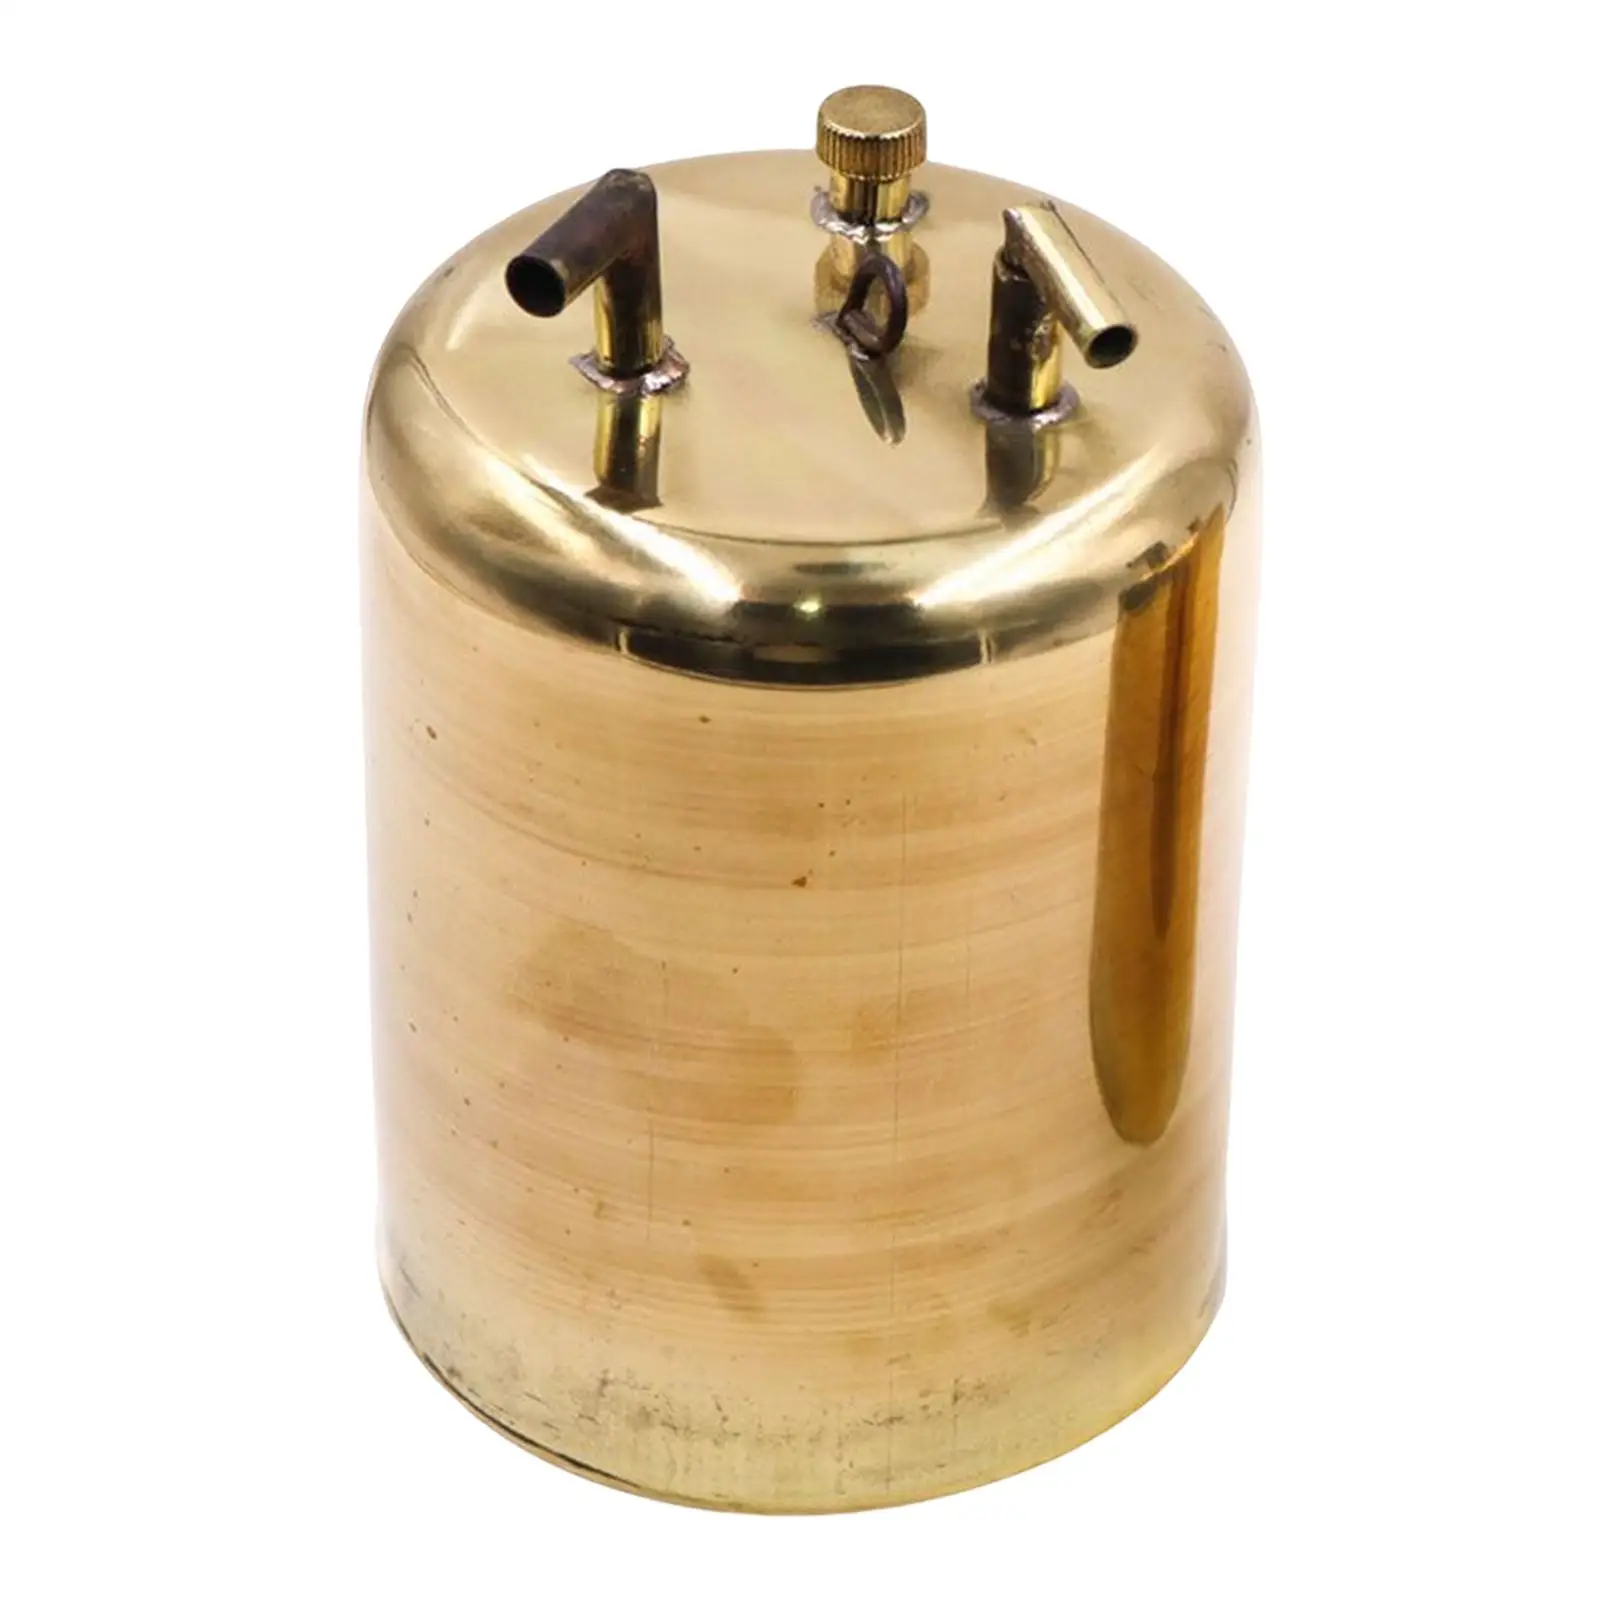 Copper Oiler Replaces  Install Height 175mm Diameter 110mm Bottle for Melting 